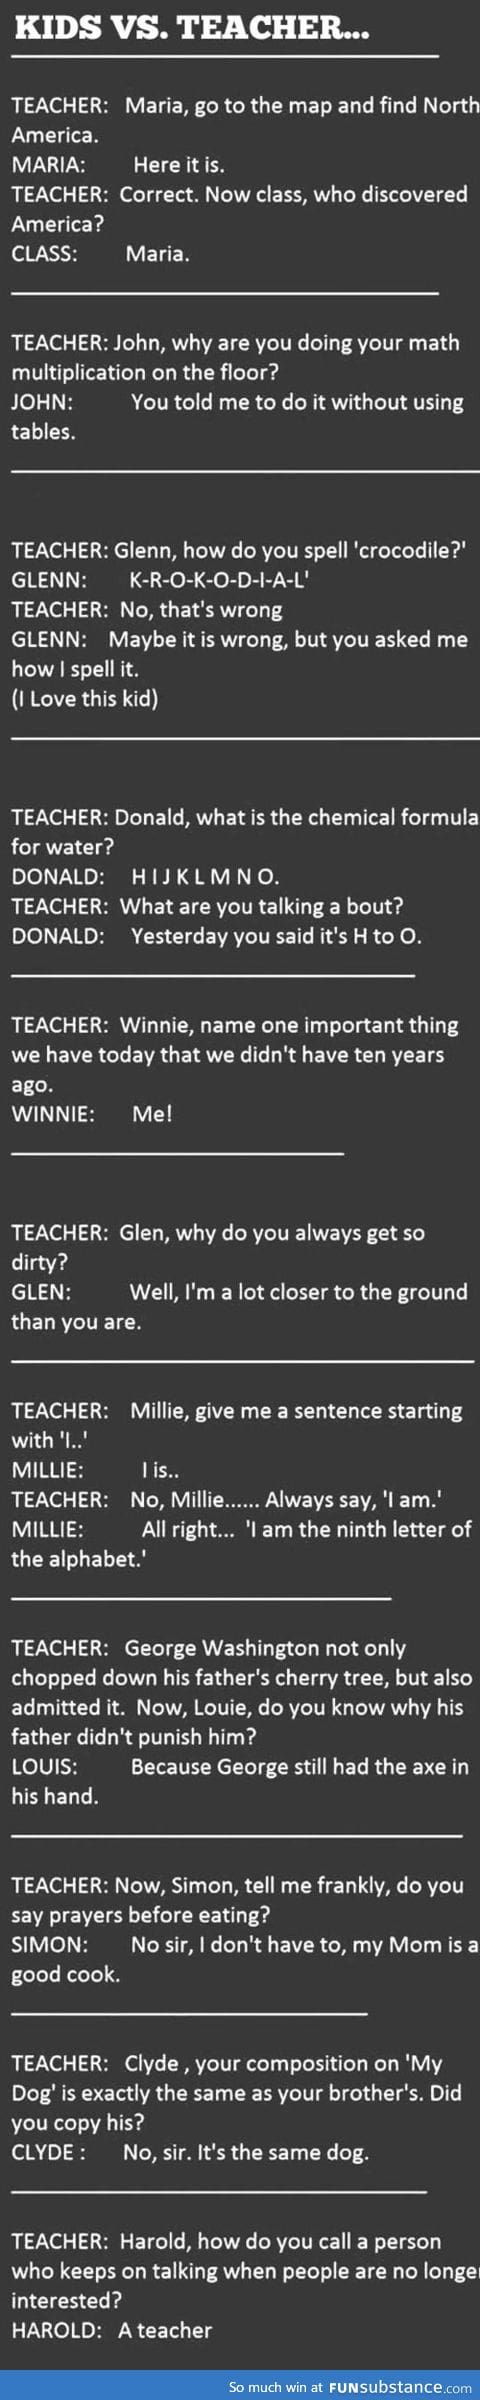 Kids are smarter than teachers